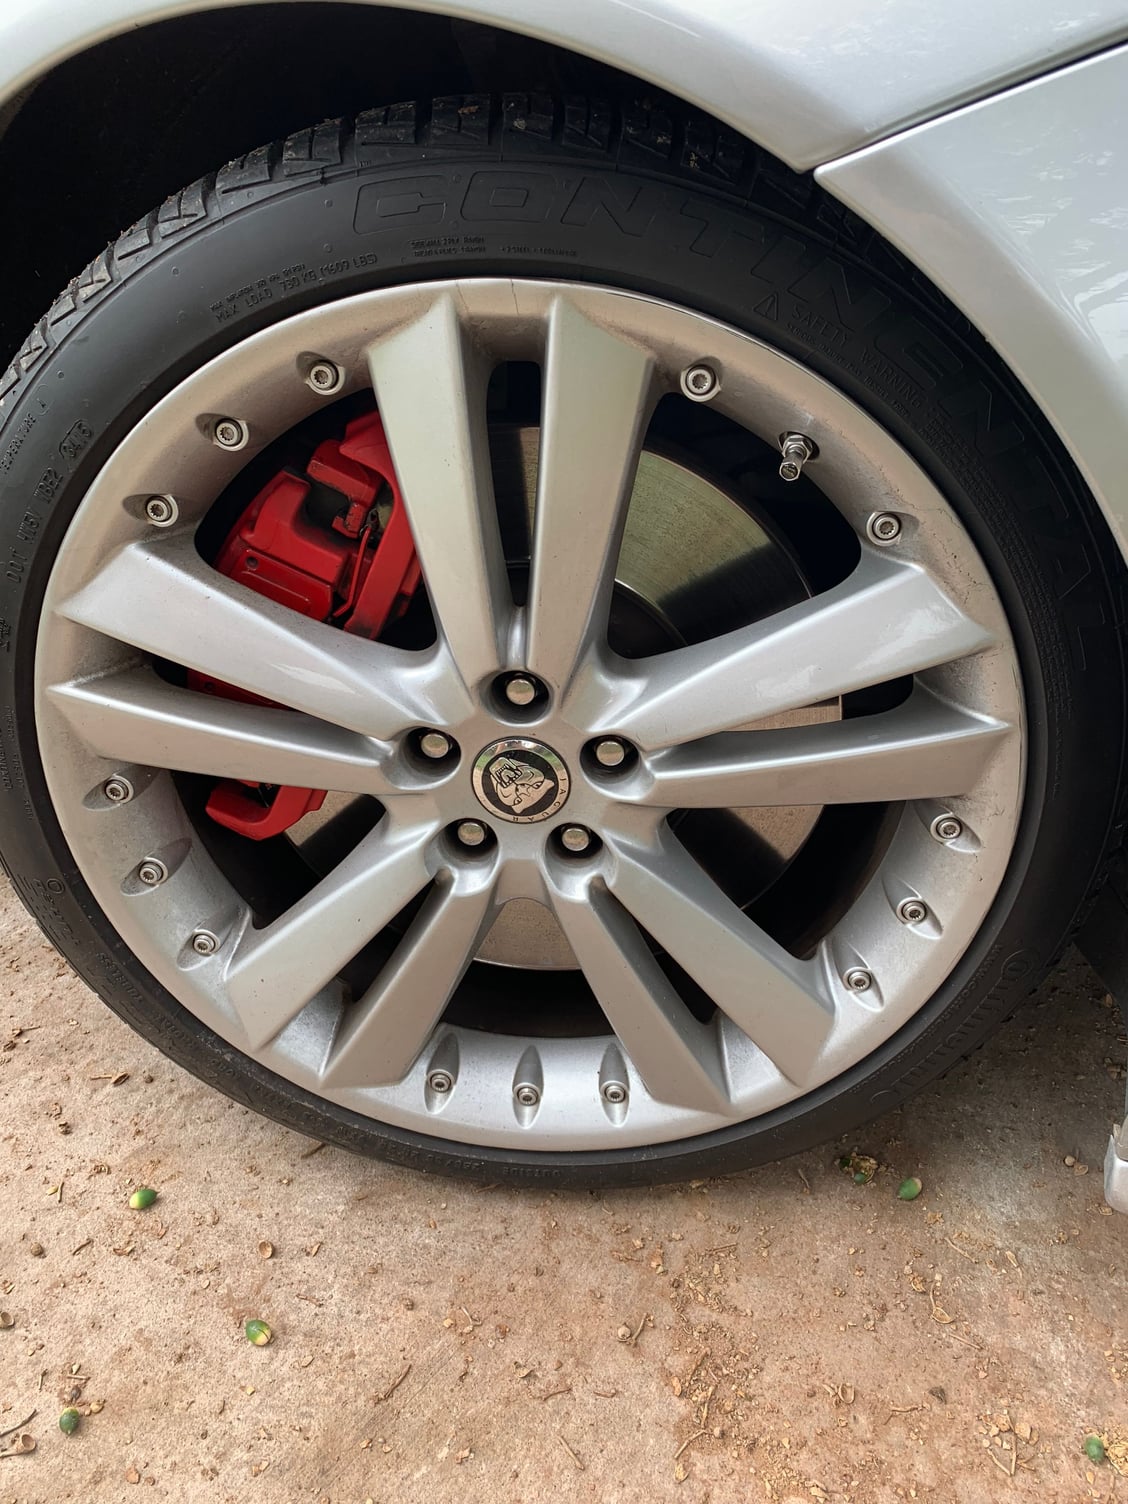 Wheels and Tires/Axles - Kalimnos 20inch wheels (full set) - Used - 2010 to 2015 Jaguar XK150 - San Antonio, TX 78202, United States